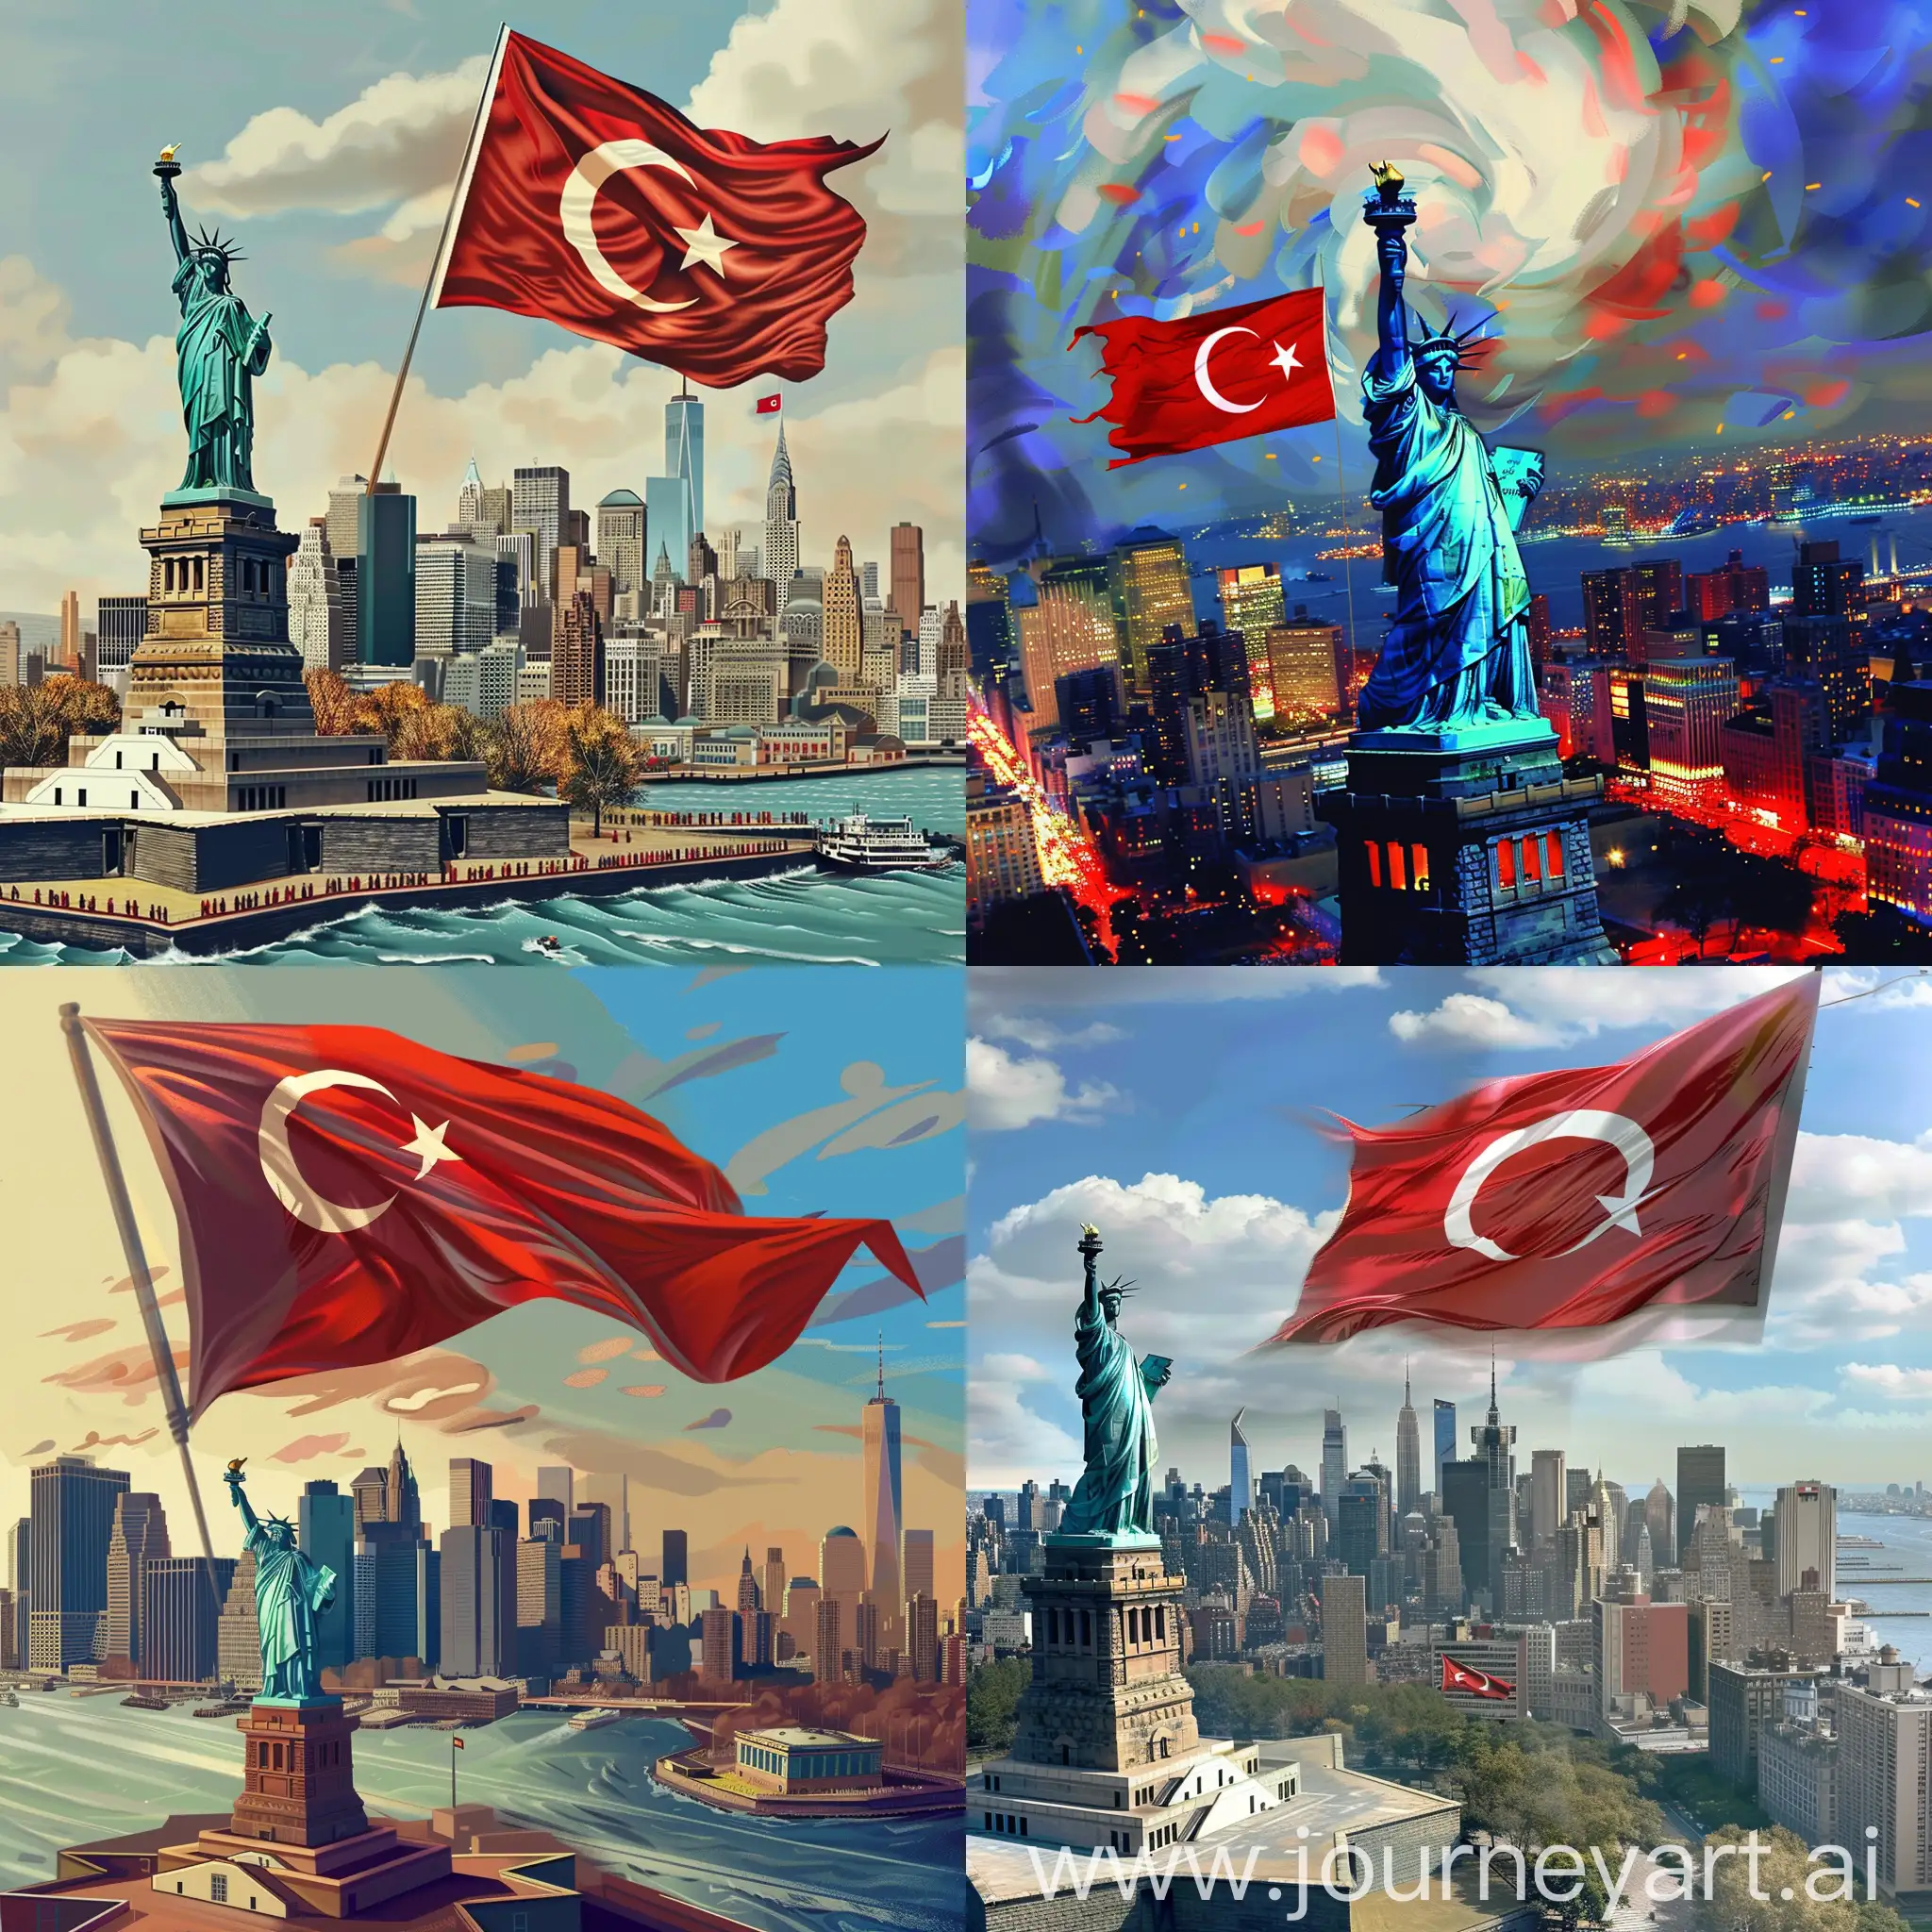 Turkish-Majority-New-York-City-Statue-of-Liberty-with-Turkish-Flag